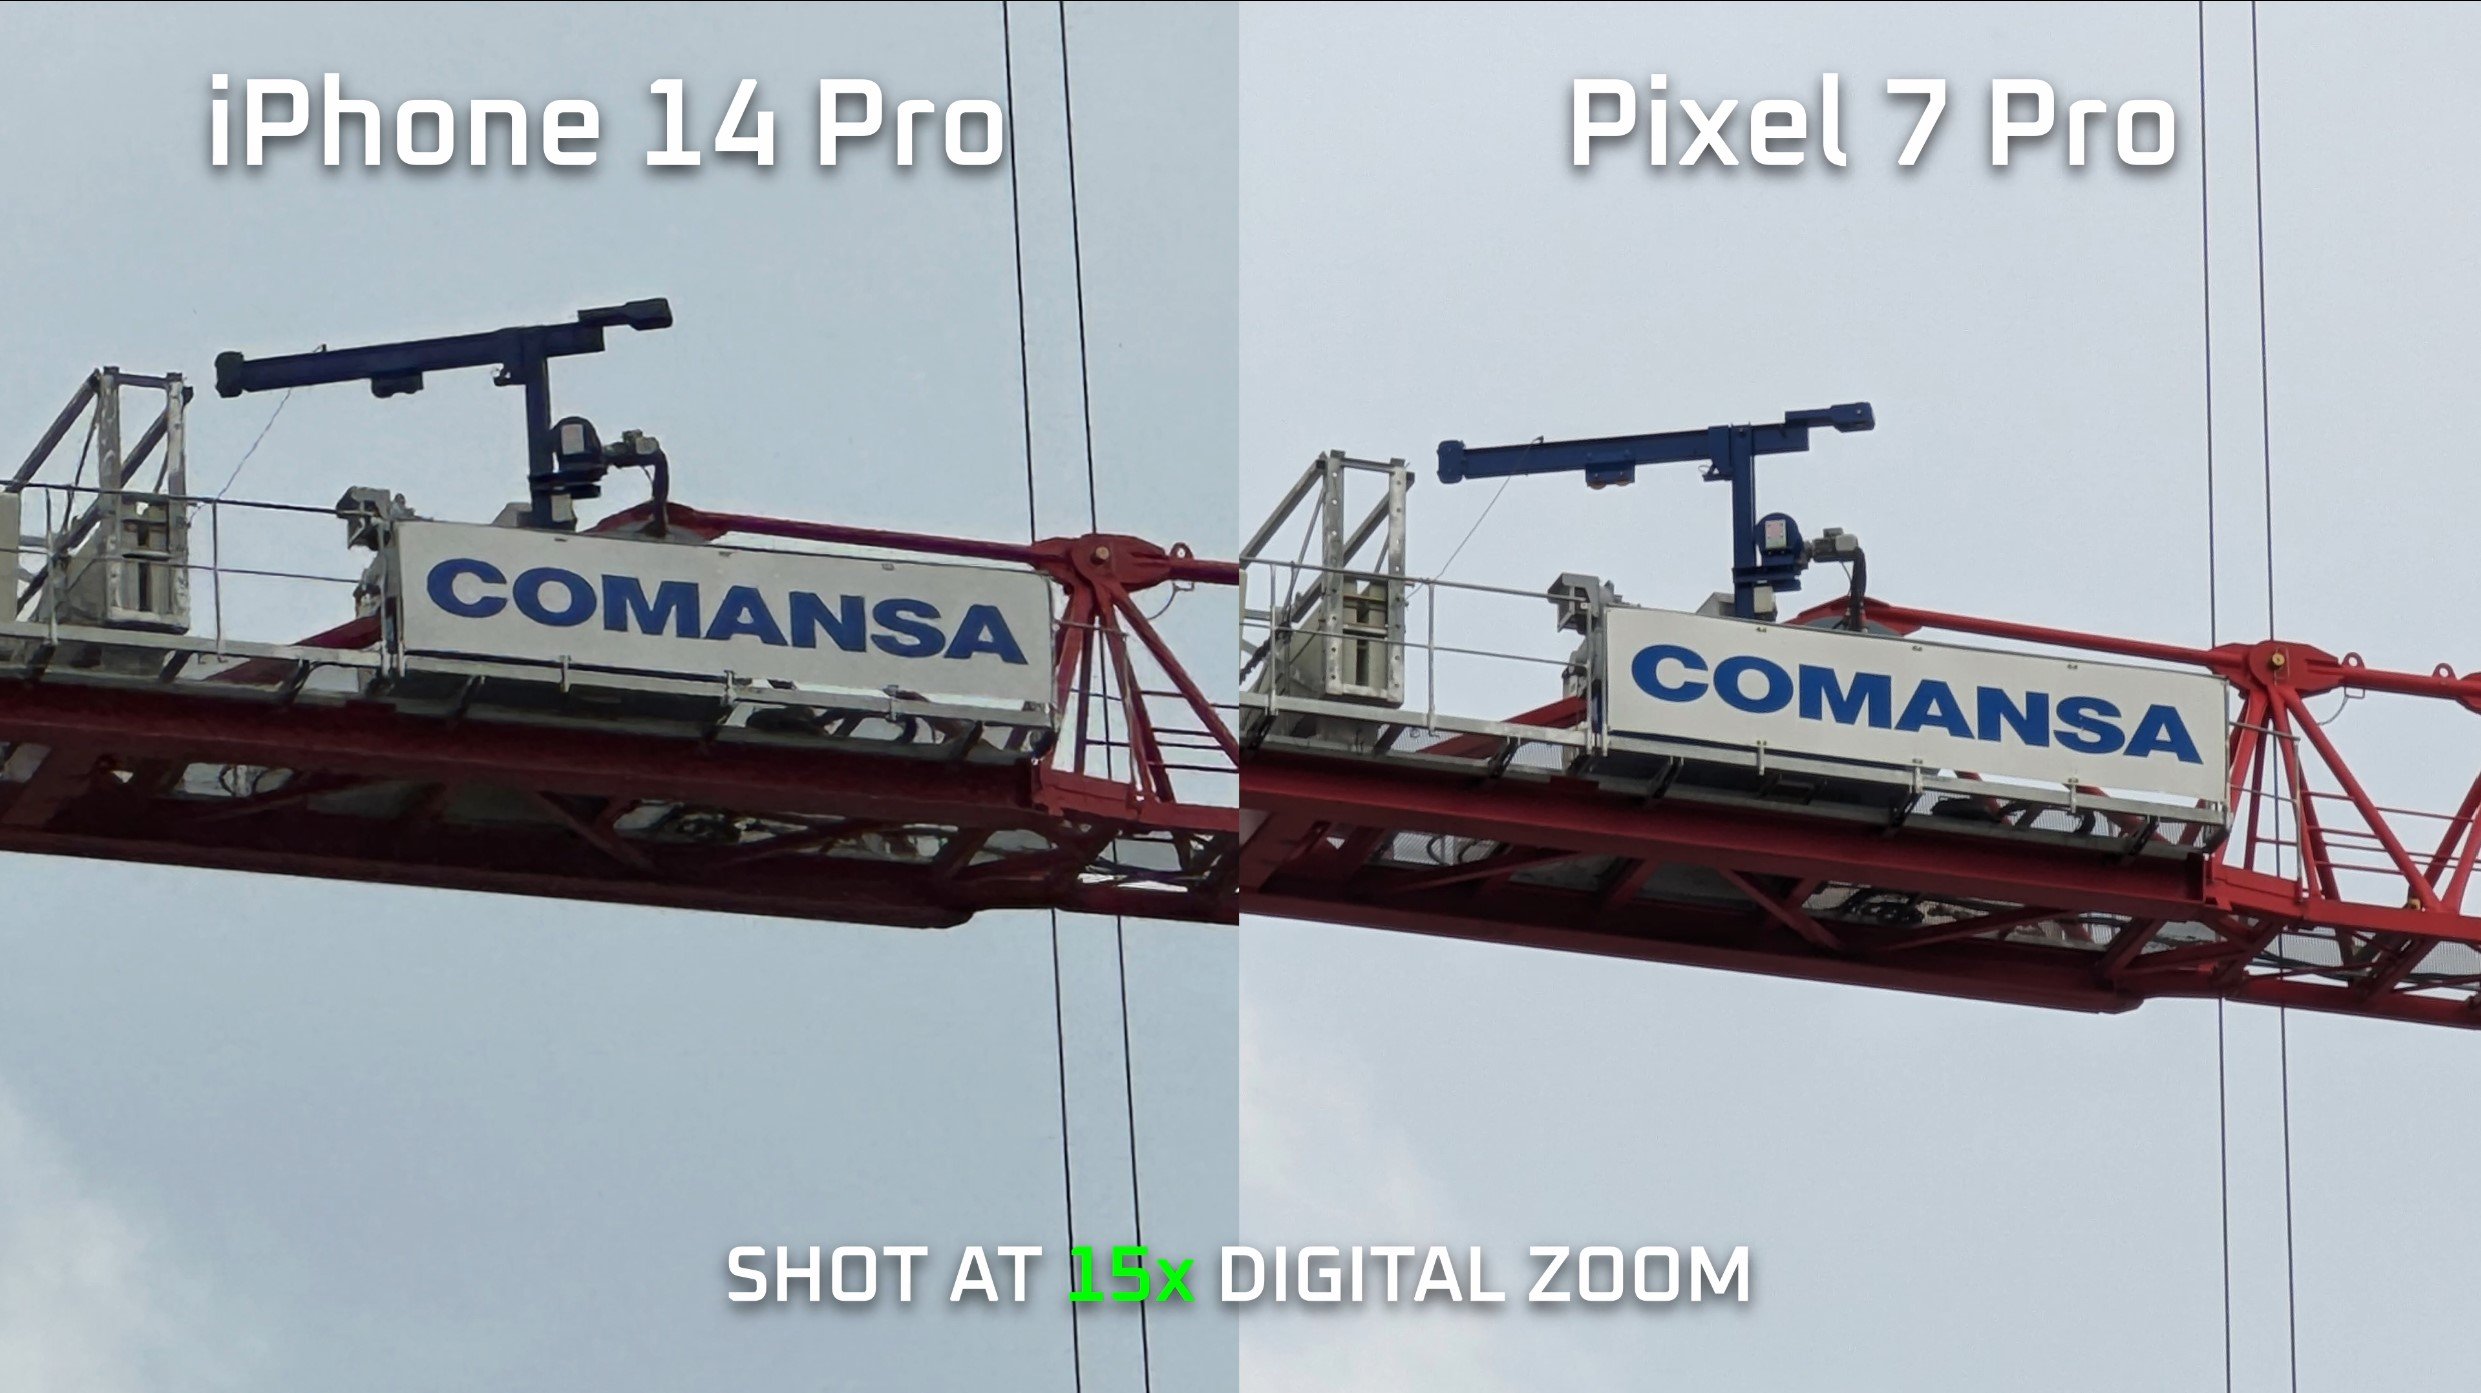 iPhone 14 Pro vs Google Pixel 7 Pro - cameras compared - Amateur  Photographer